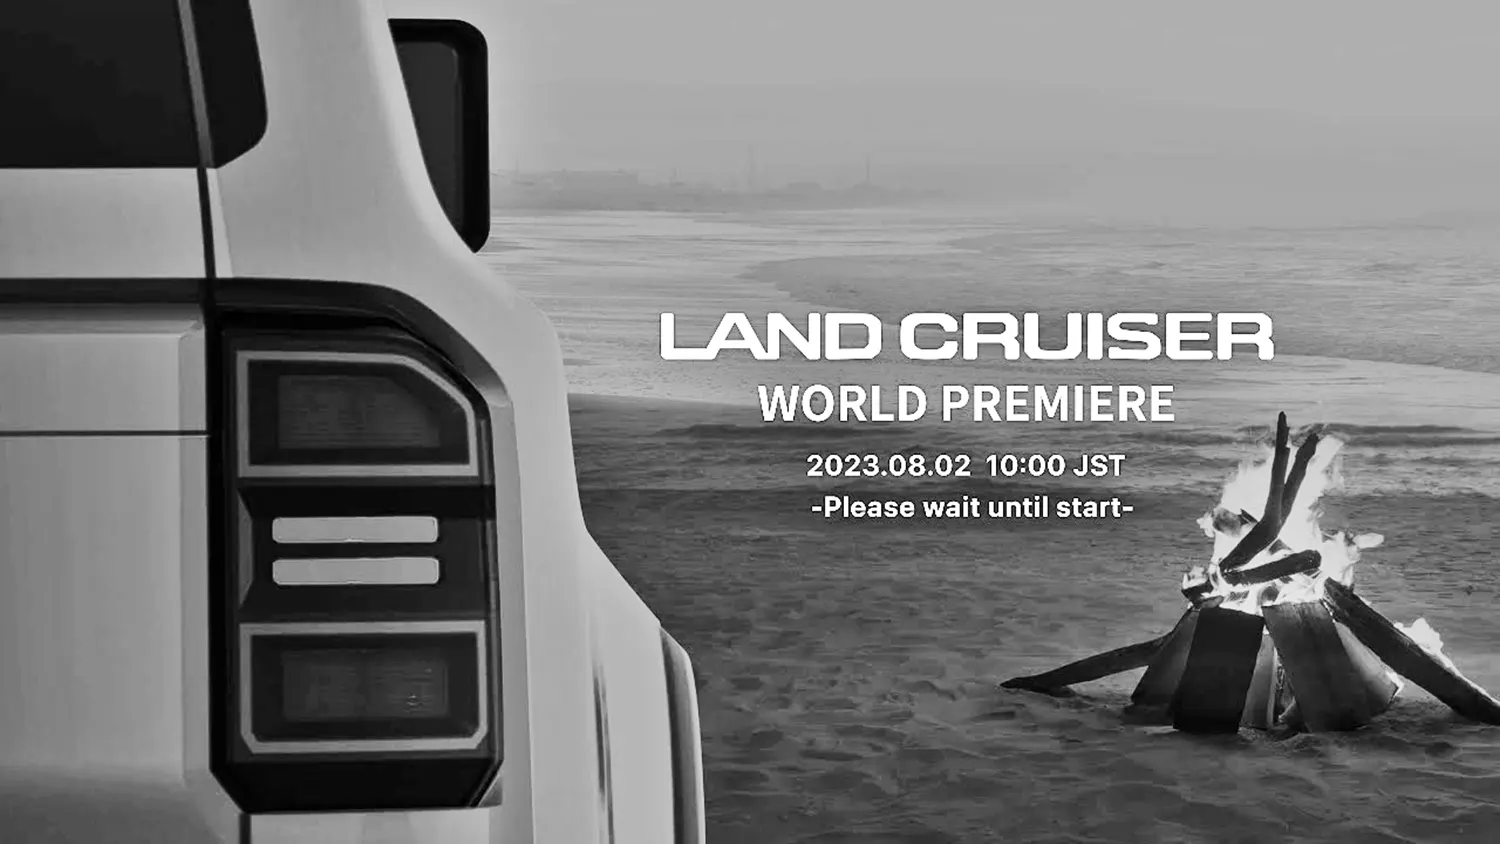 Livestream of the All-New Land Cruiser / Prado World Premiere on August 2